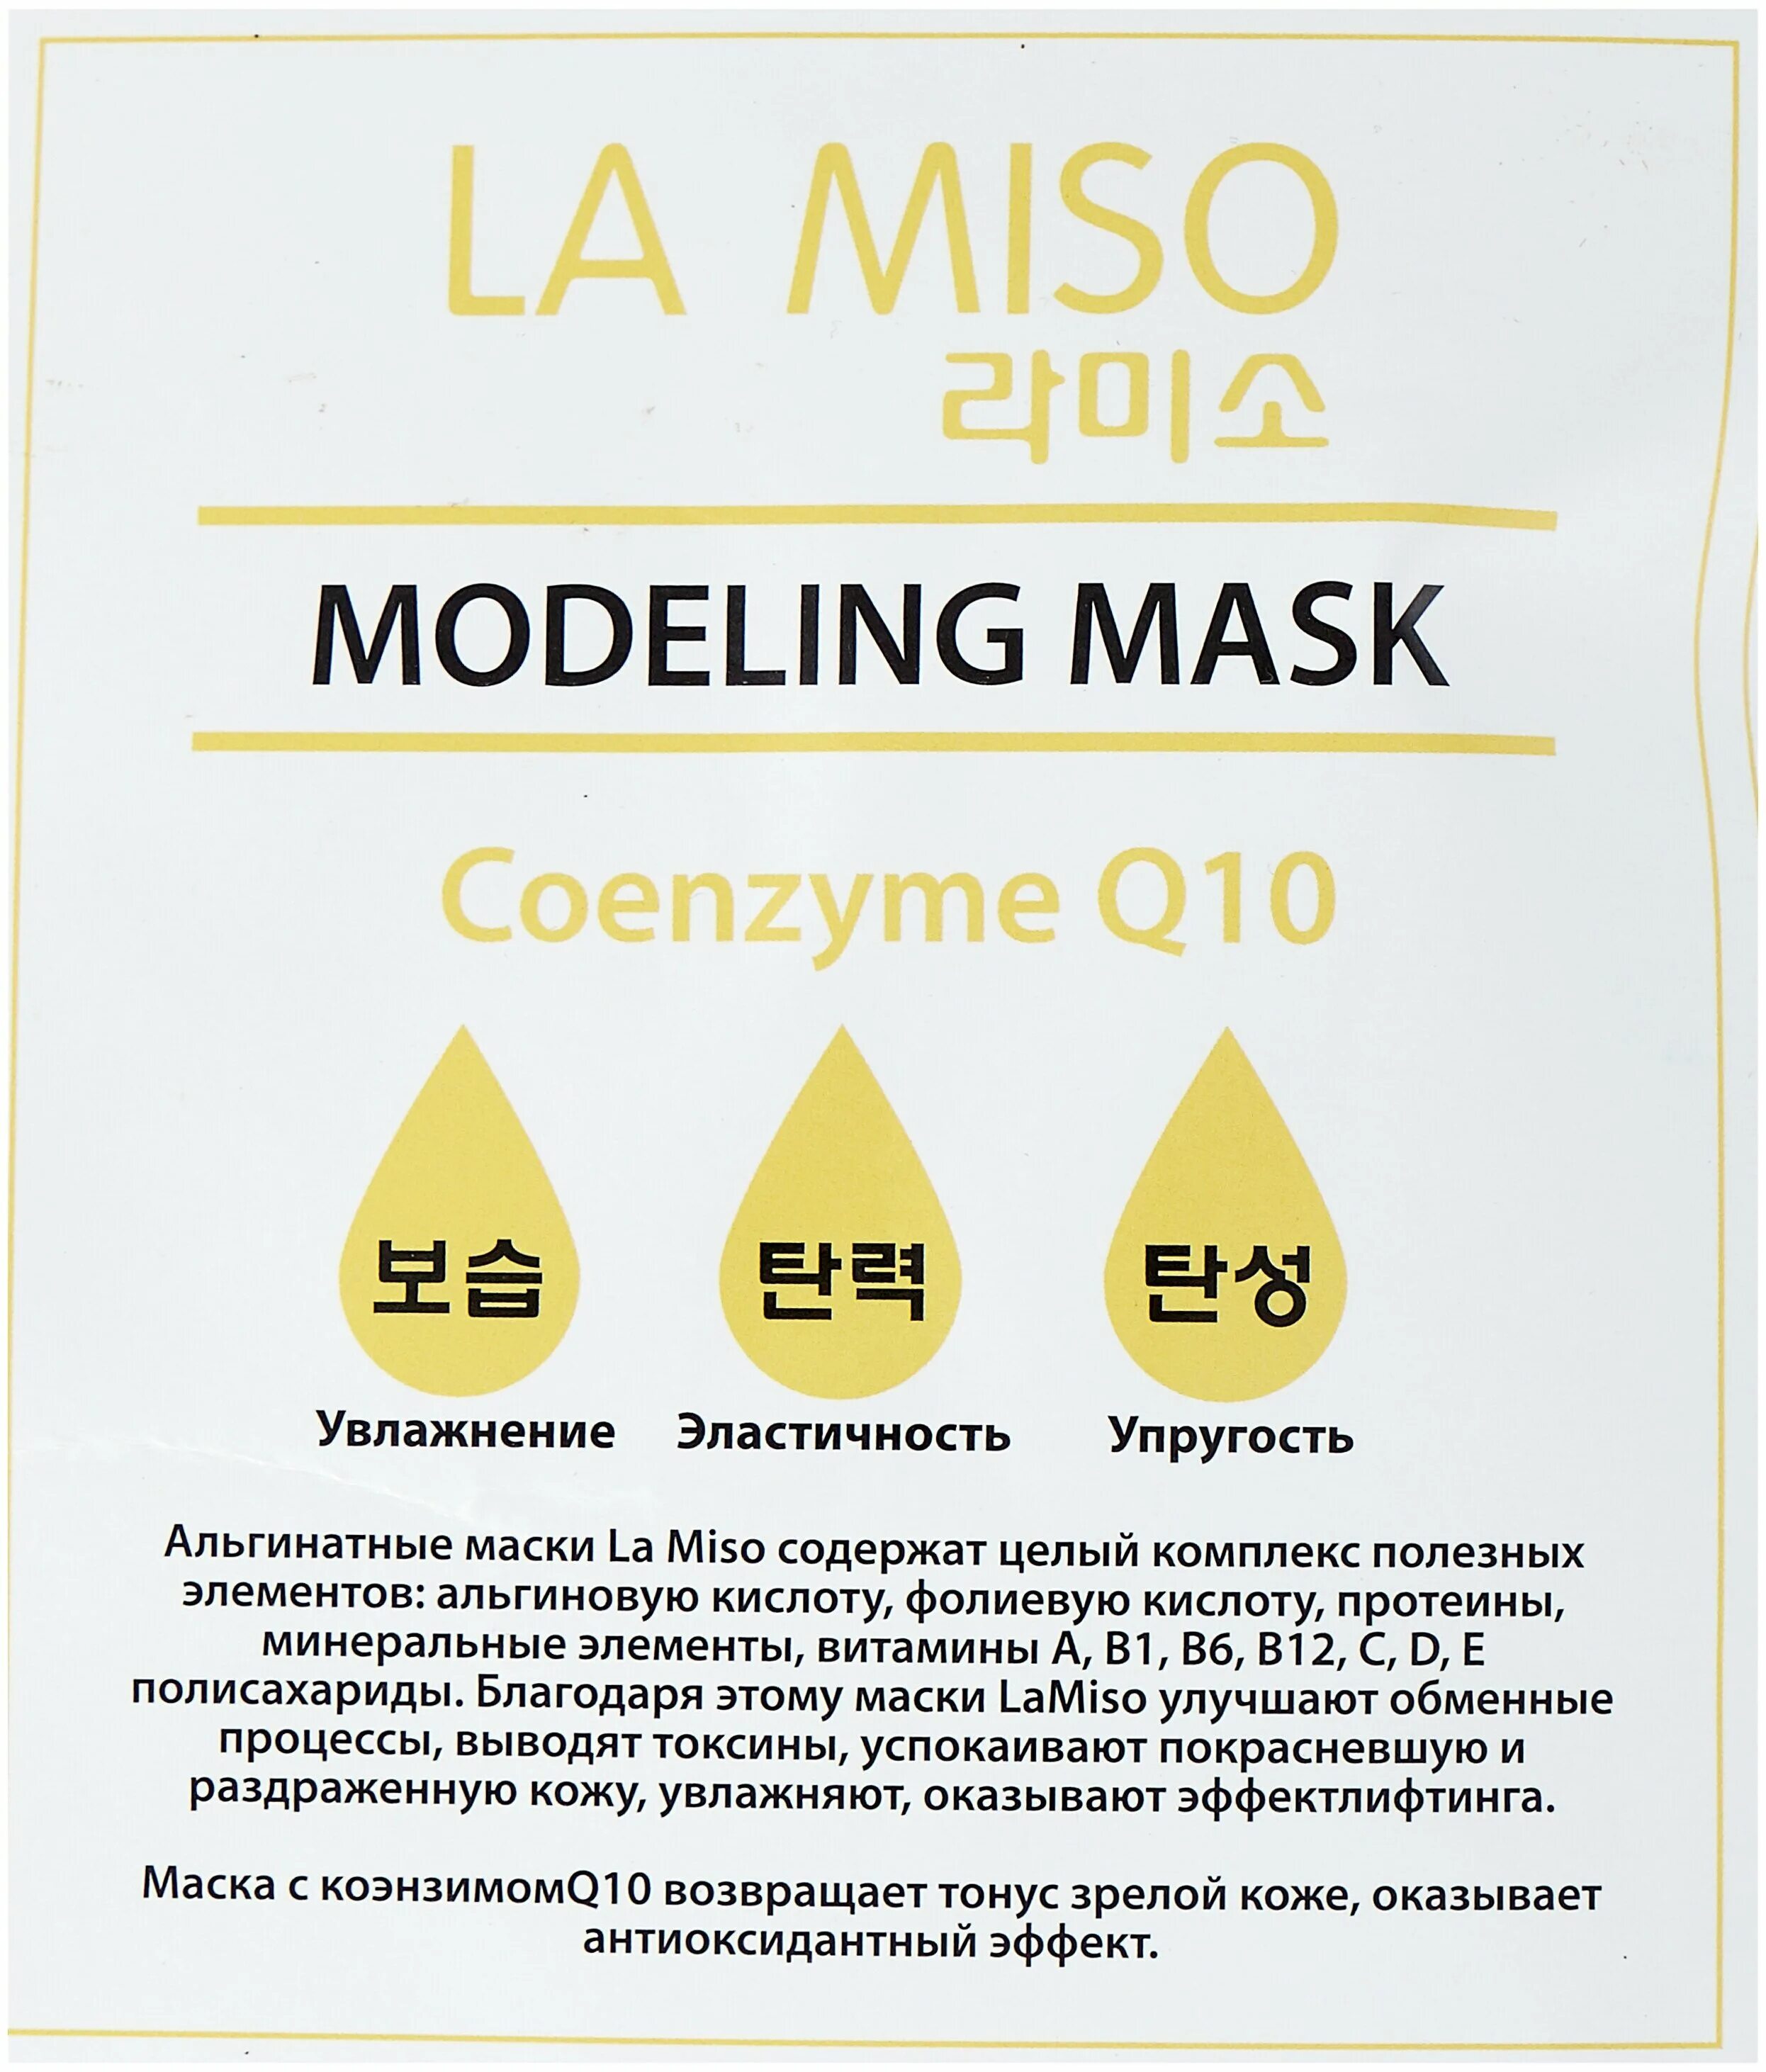 Ла мисо альгинатная маска. La Miso альгинатная маска. Маска для лица la Miso альгинатная с коэнзимом q10. Маска альгинатная витаминизирующая la Miso Vitamin Modeling Mask, 1000 гр.